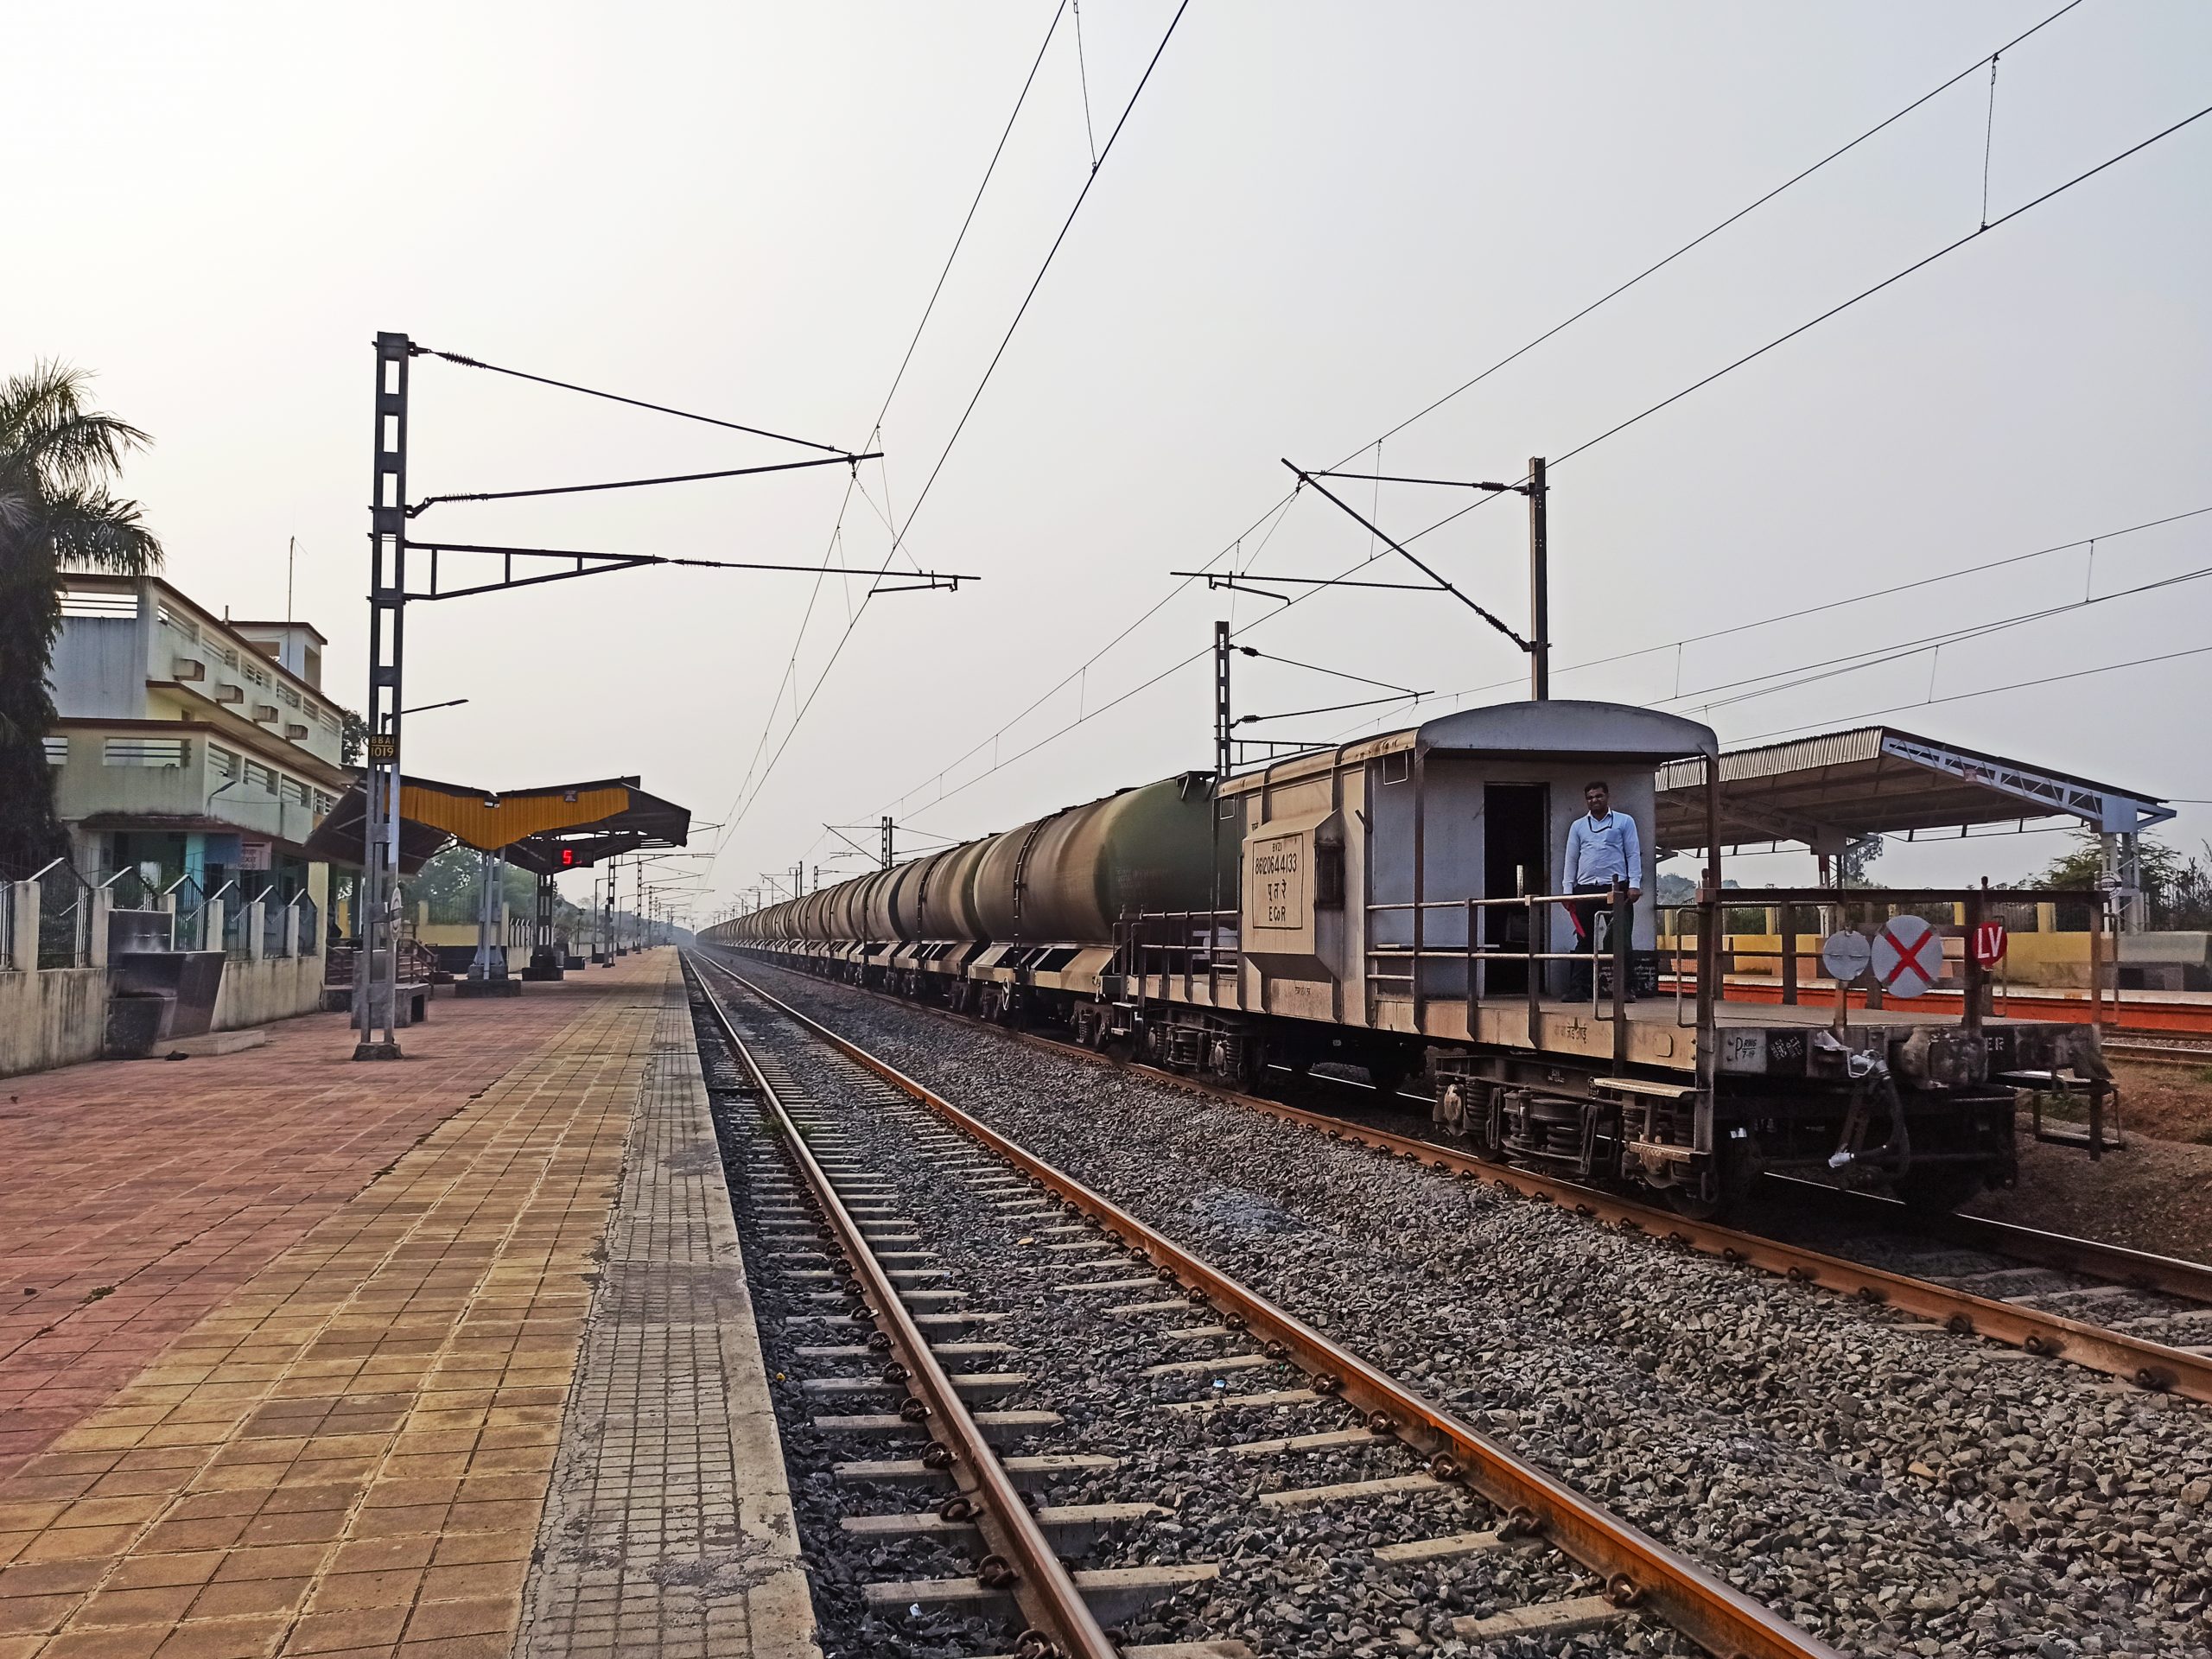 train on railway station